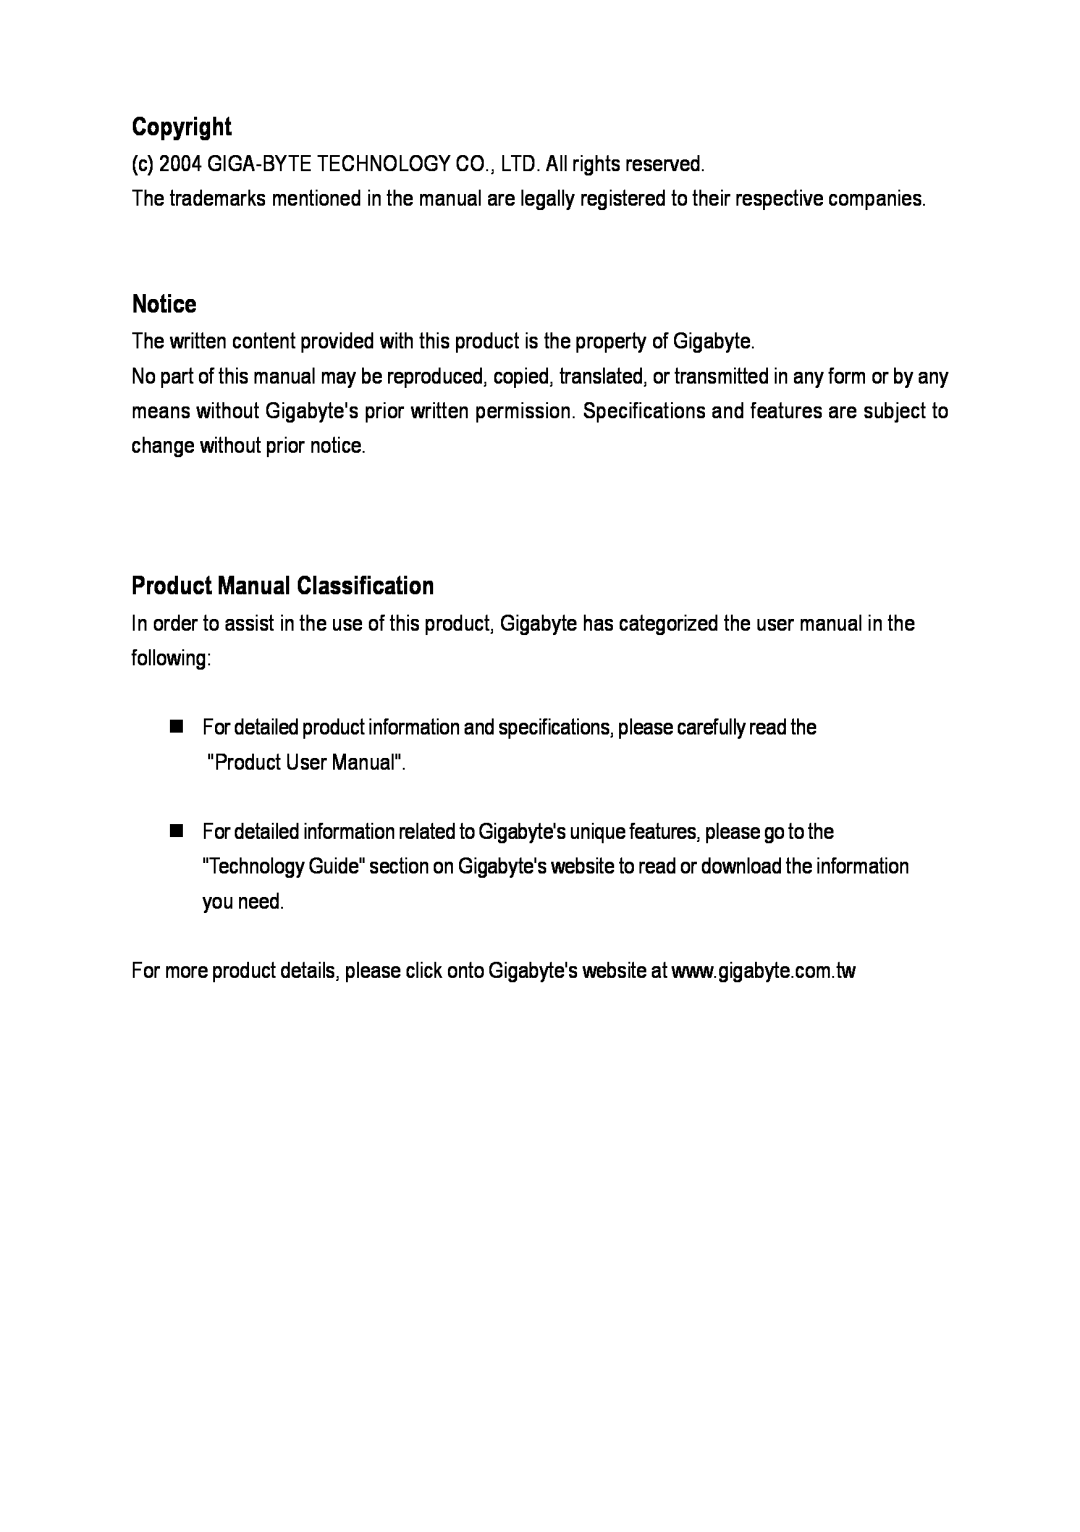 Gigabyte GA-8I915P-MF user manual Copyright, Product Manual Classification 